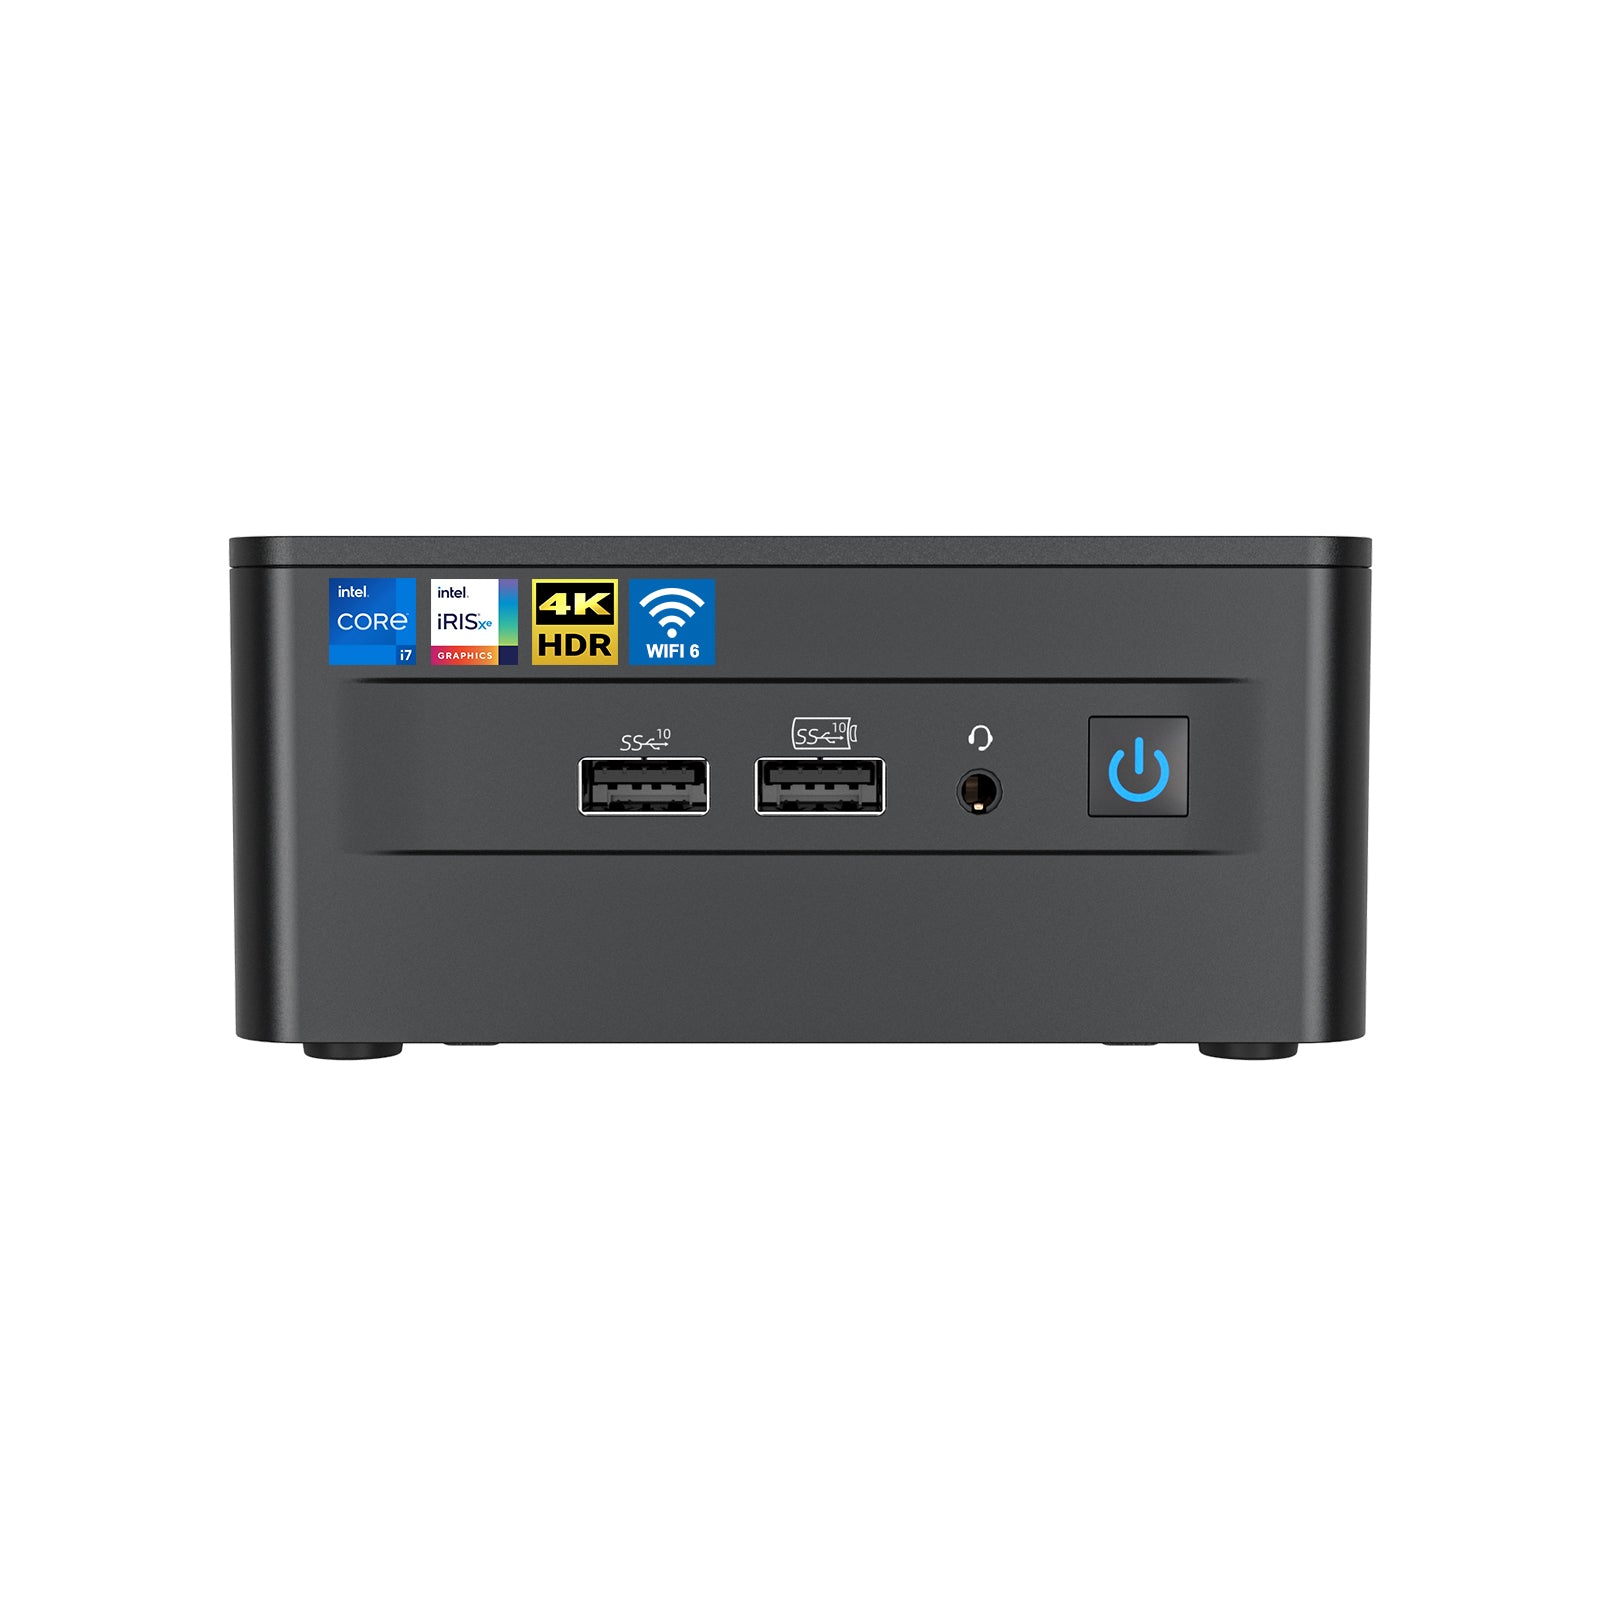 Intel NUC 12 Pro Mini PC with 2x front USB 3.2 ports.